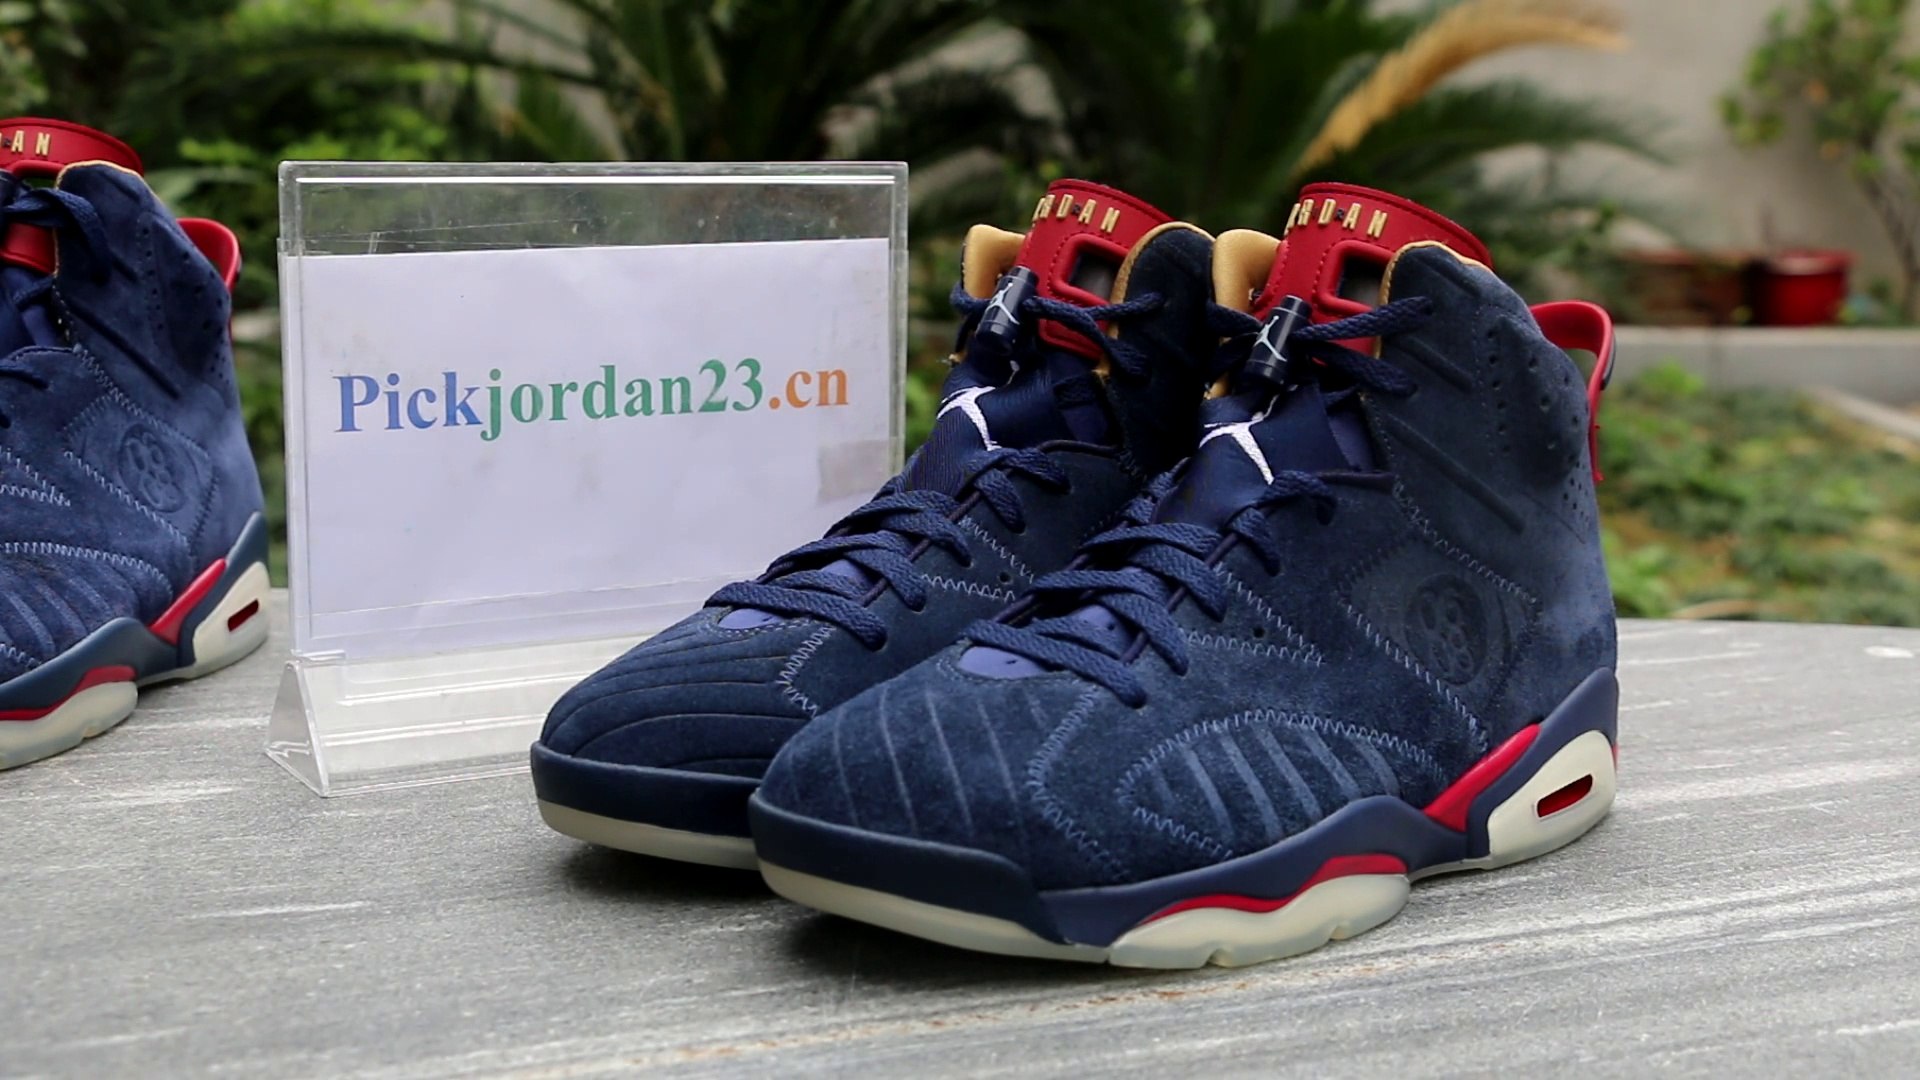 Air Jordan 6 Doernbecher Shoes Review From PickJordan23.cn─影片 Dailymotion